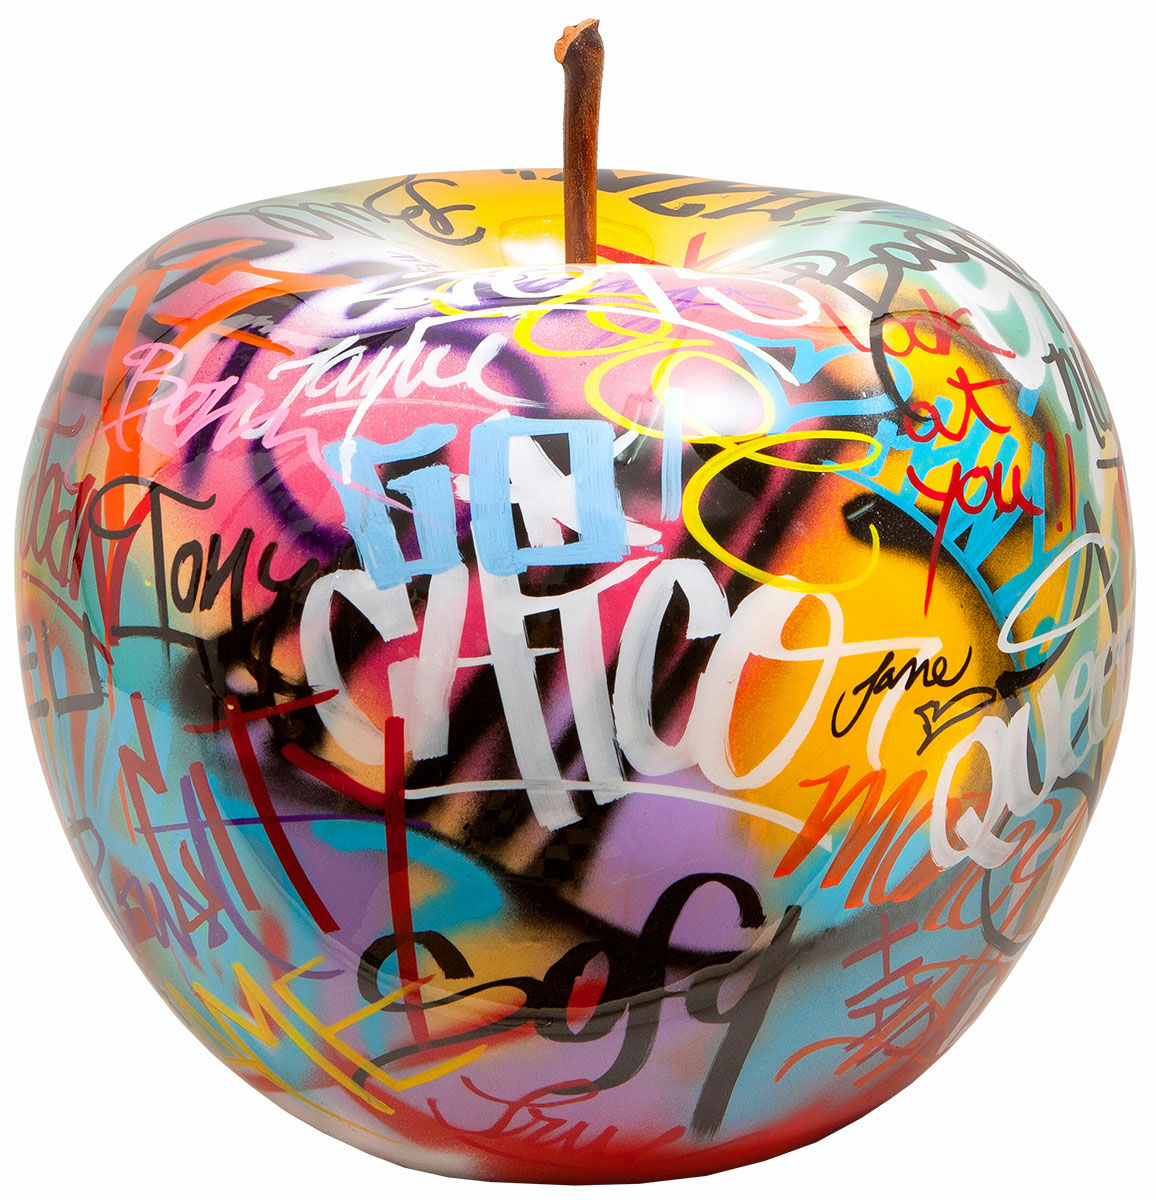 Keramisk objekt "Apple Graffiti" von Bruno